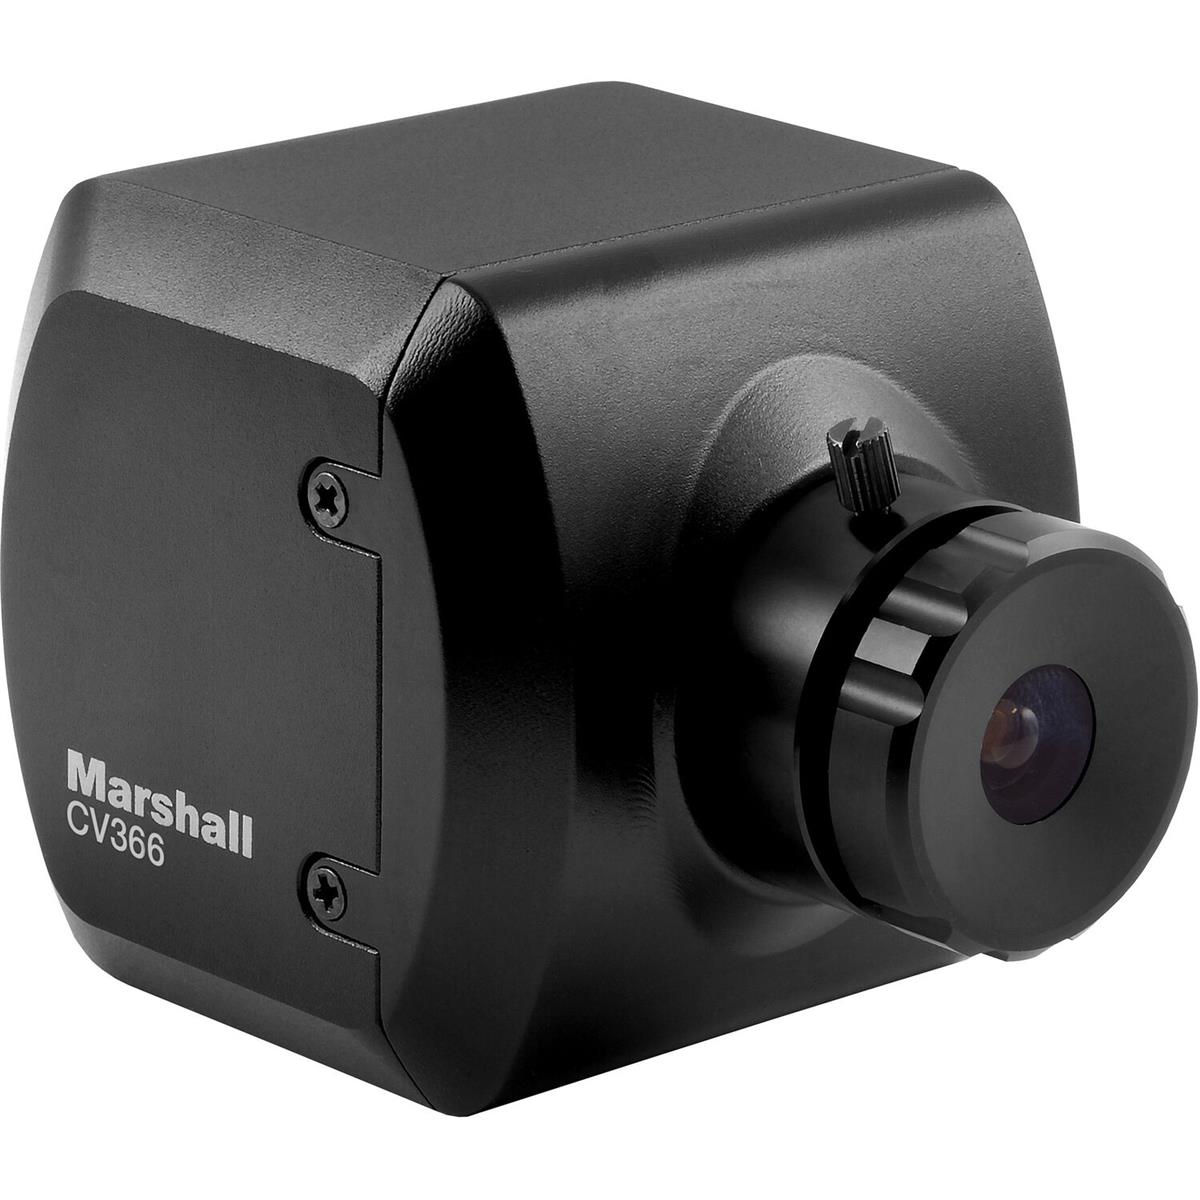 Image of Marshall Electronics CV366 2.2MP Full HD 3G-SDI/HDMI Compact Genlock Camera